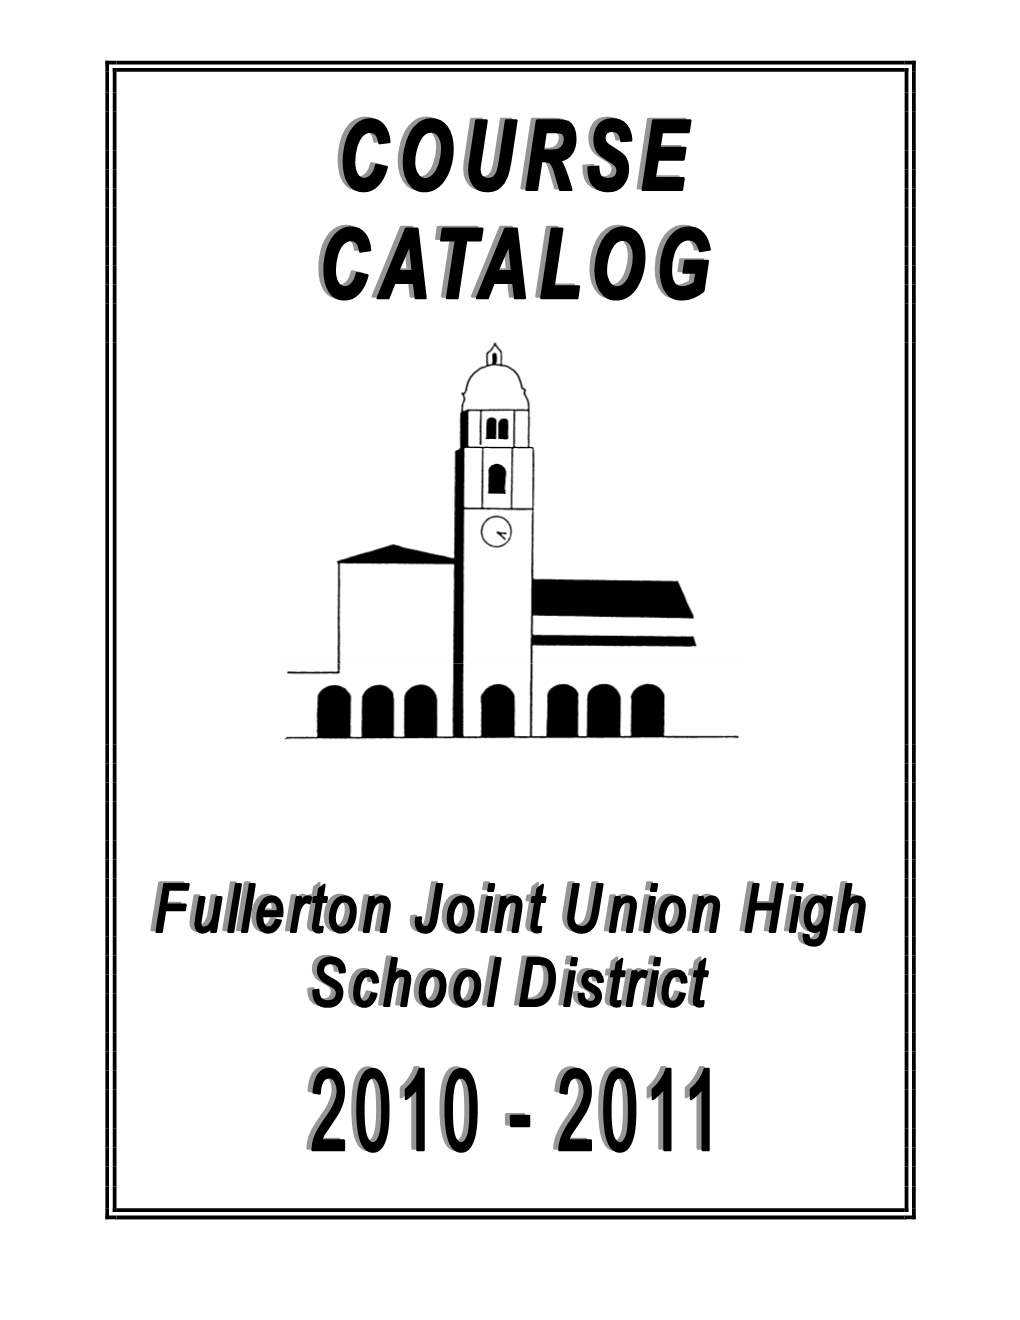 2010-2011 Catalog